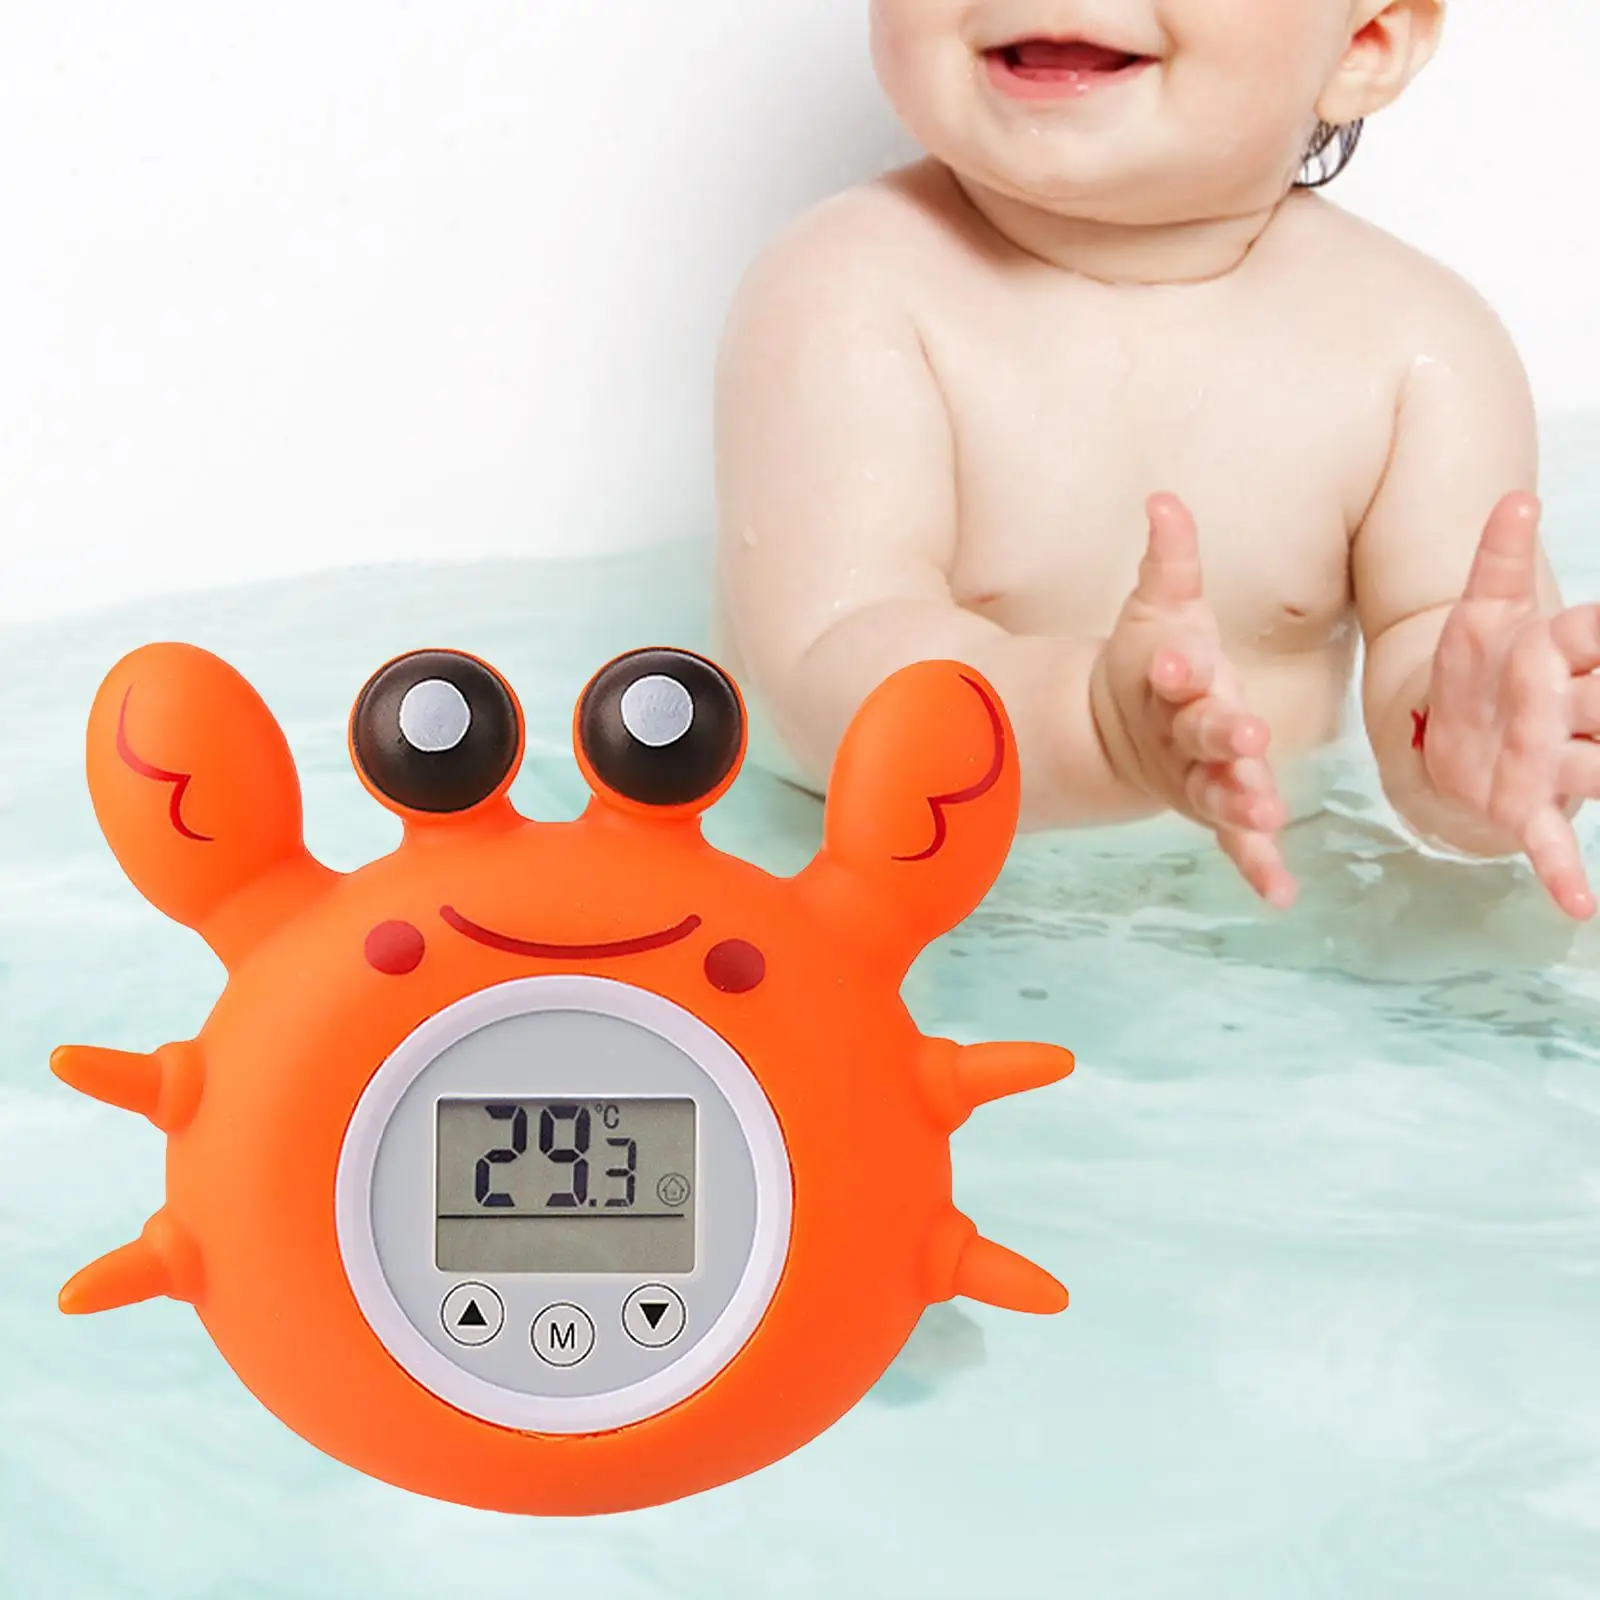 Temperature Measurement Toy Bath Floating for Shower Indoor Child